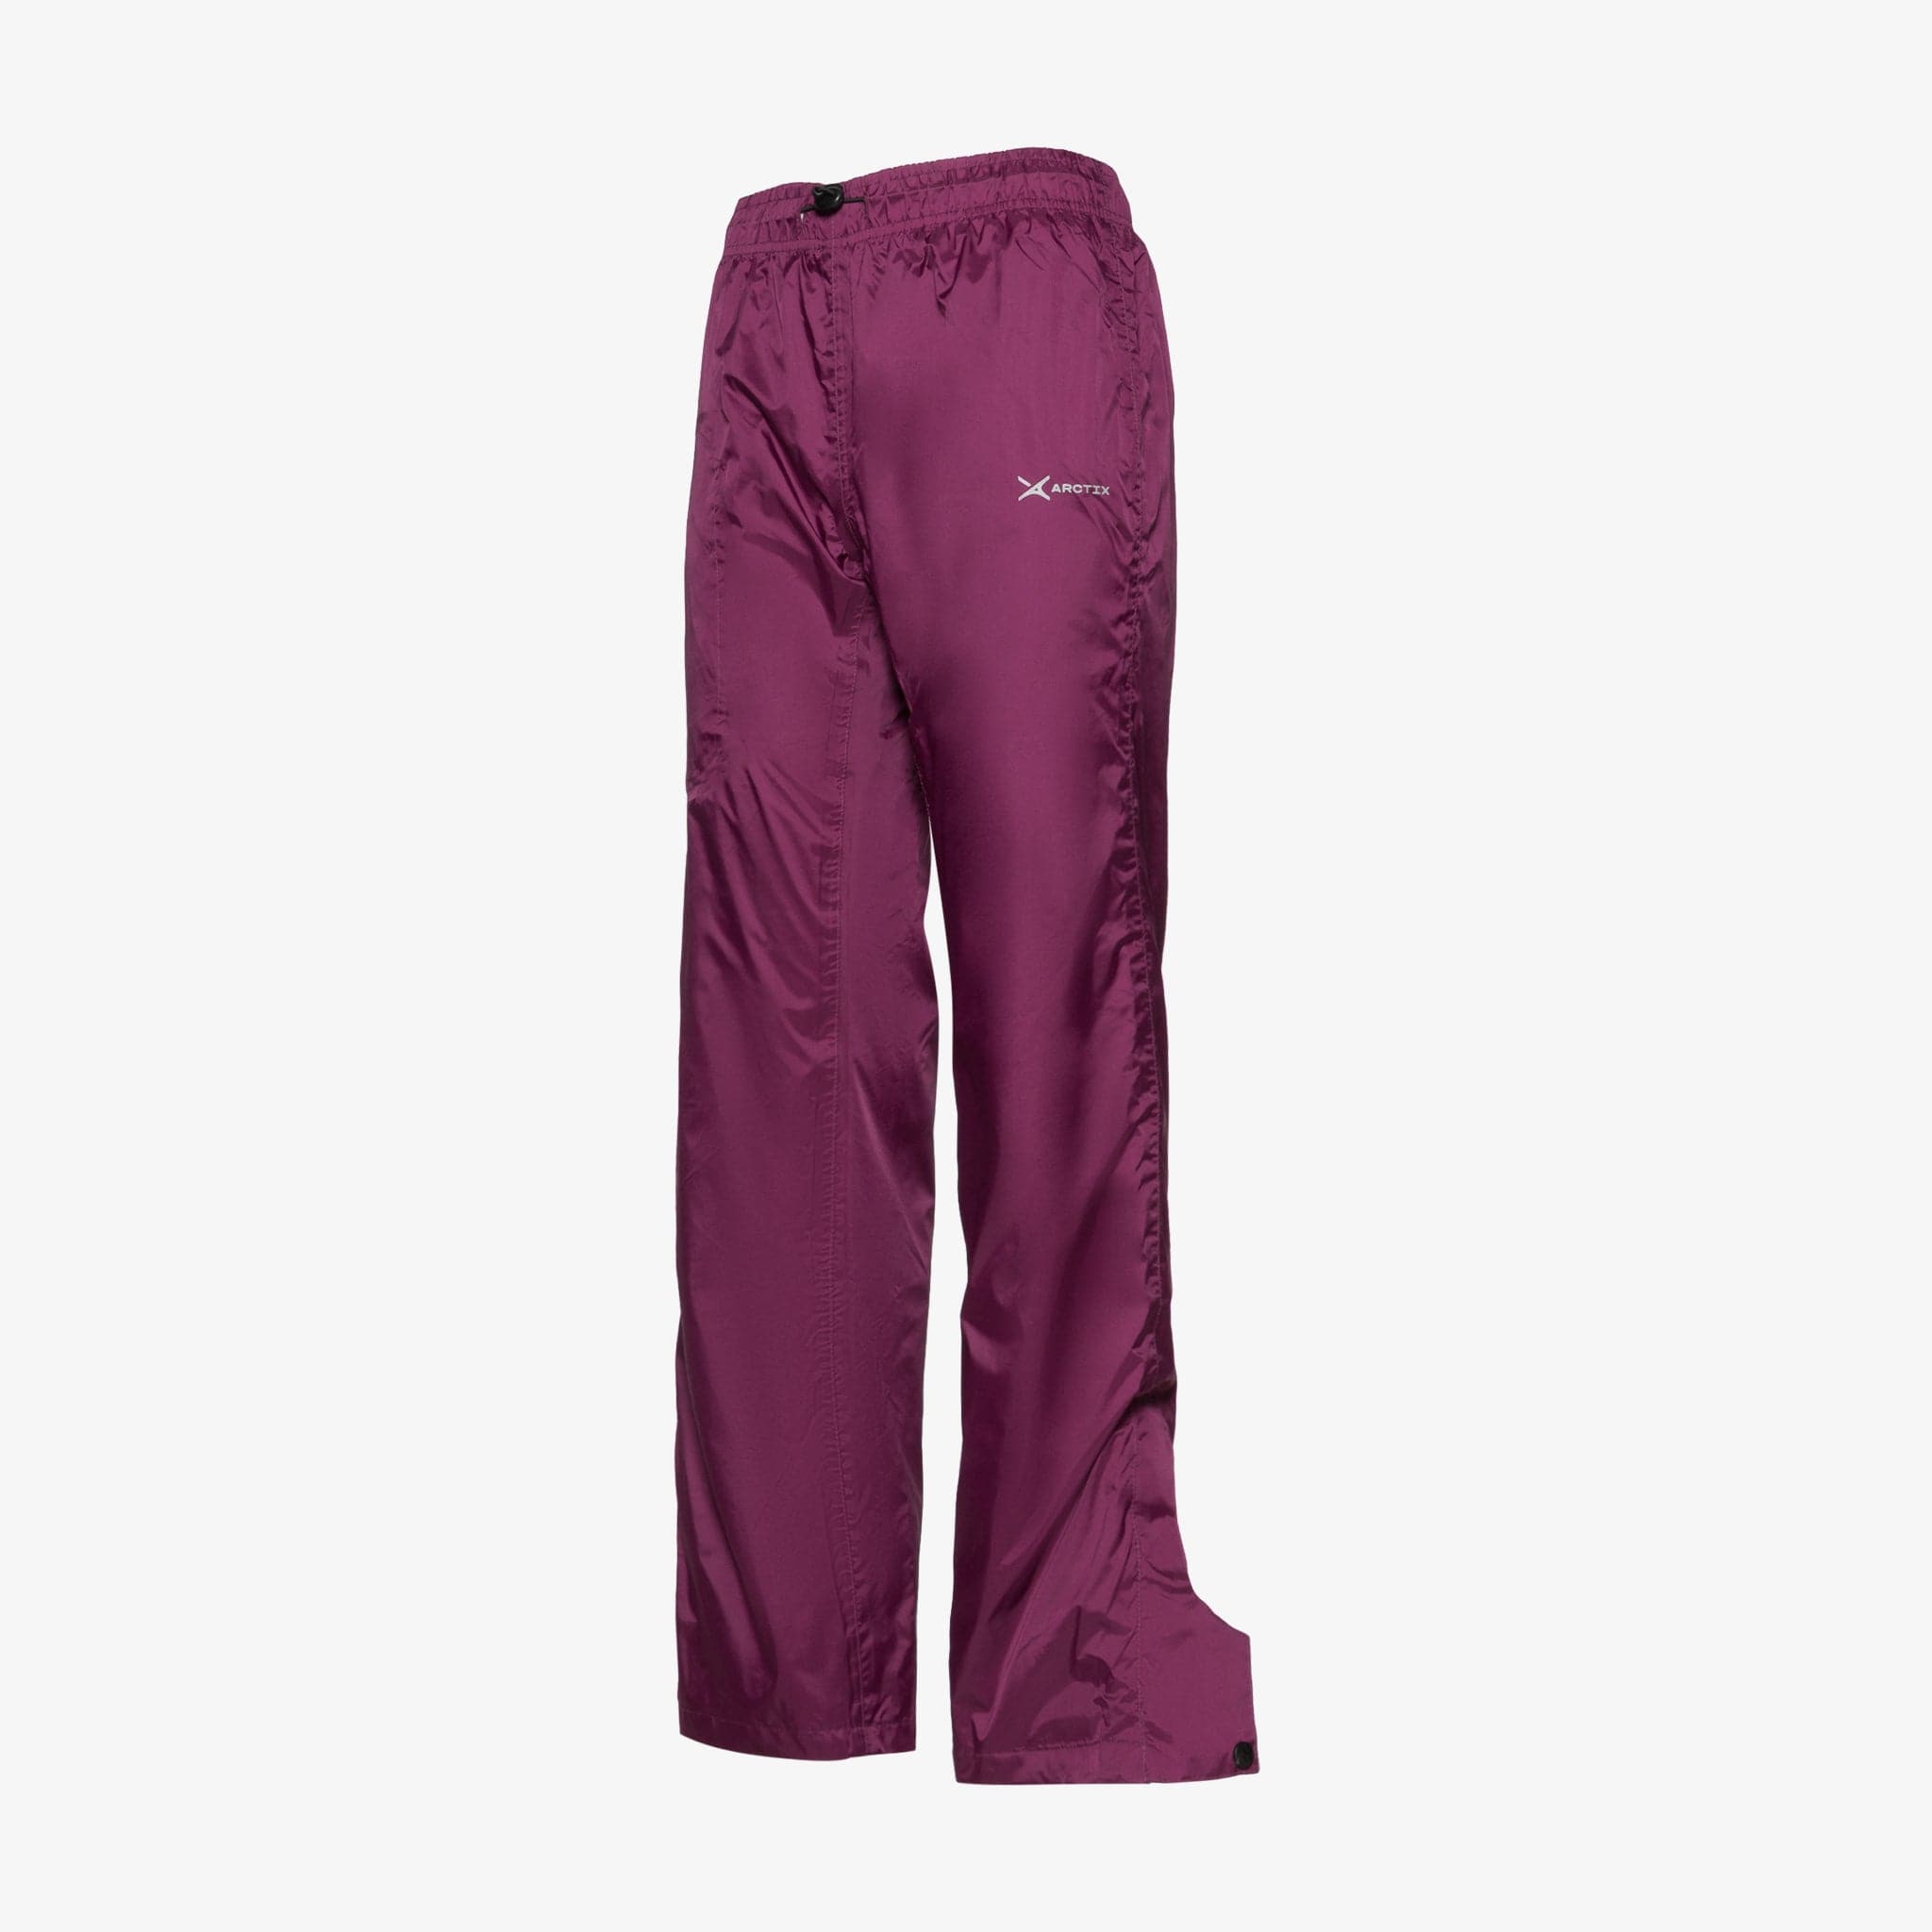 Pink satin rubber lined Incontinence pants - Hamilton Classics Rainwear